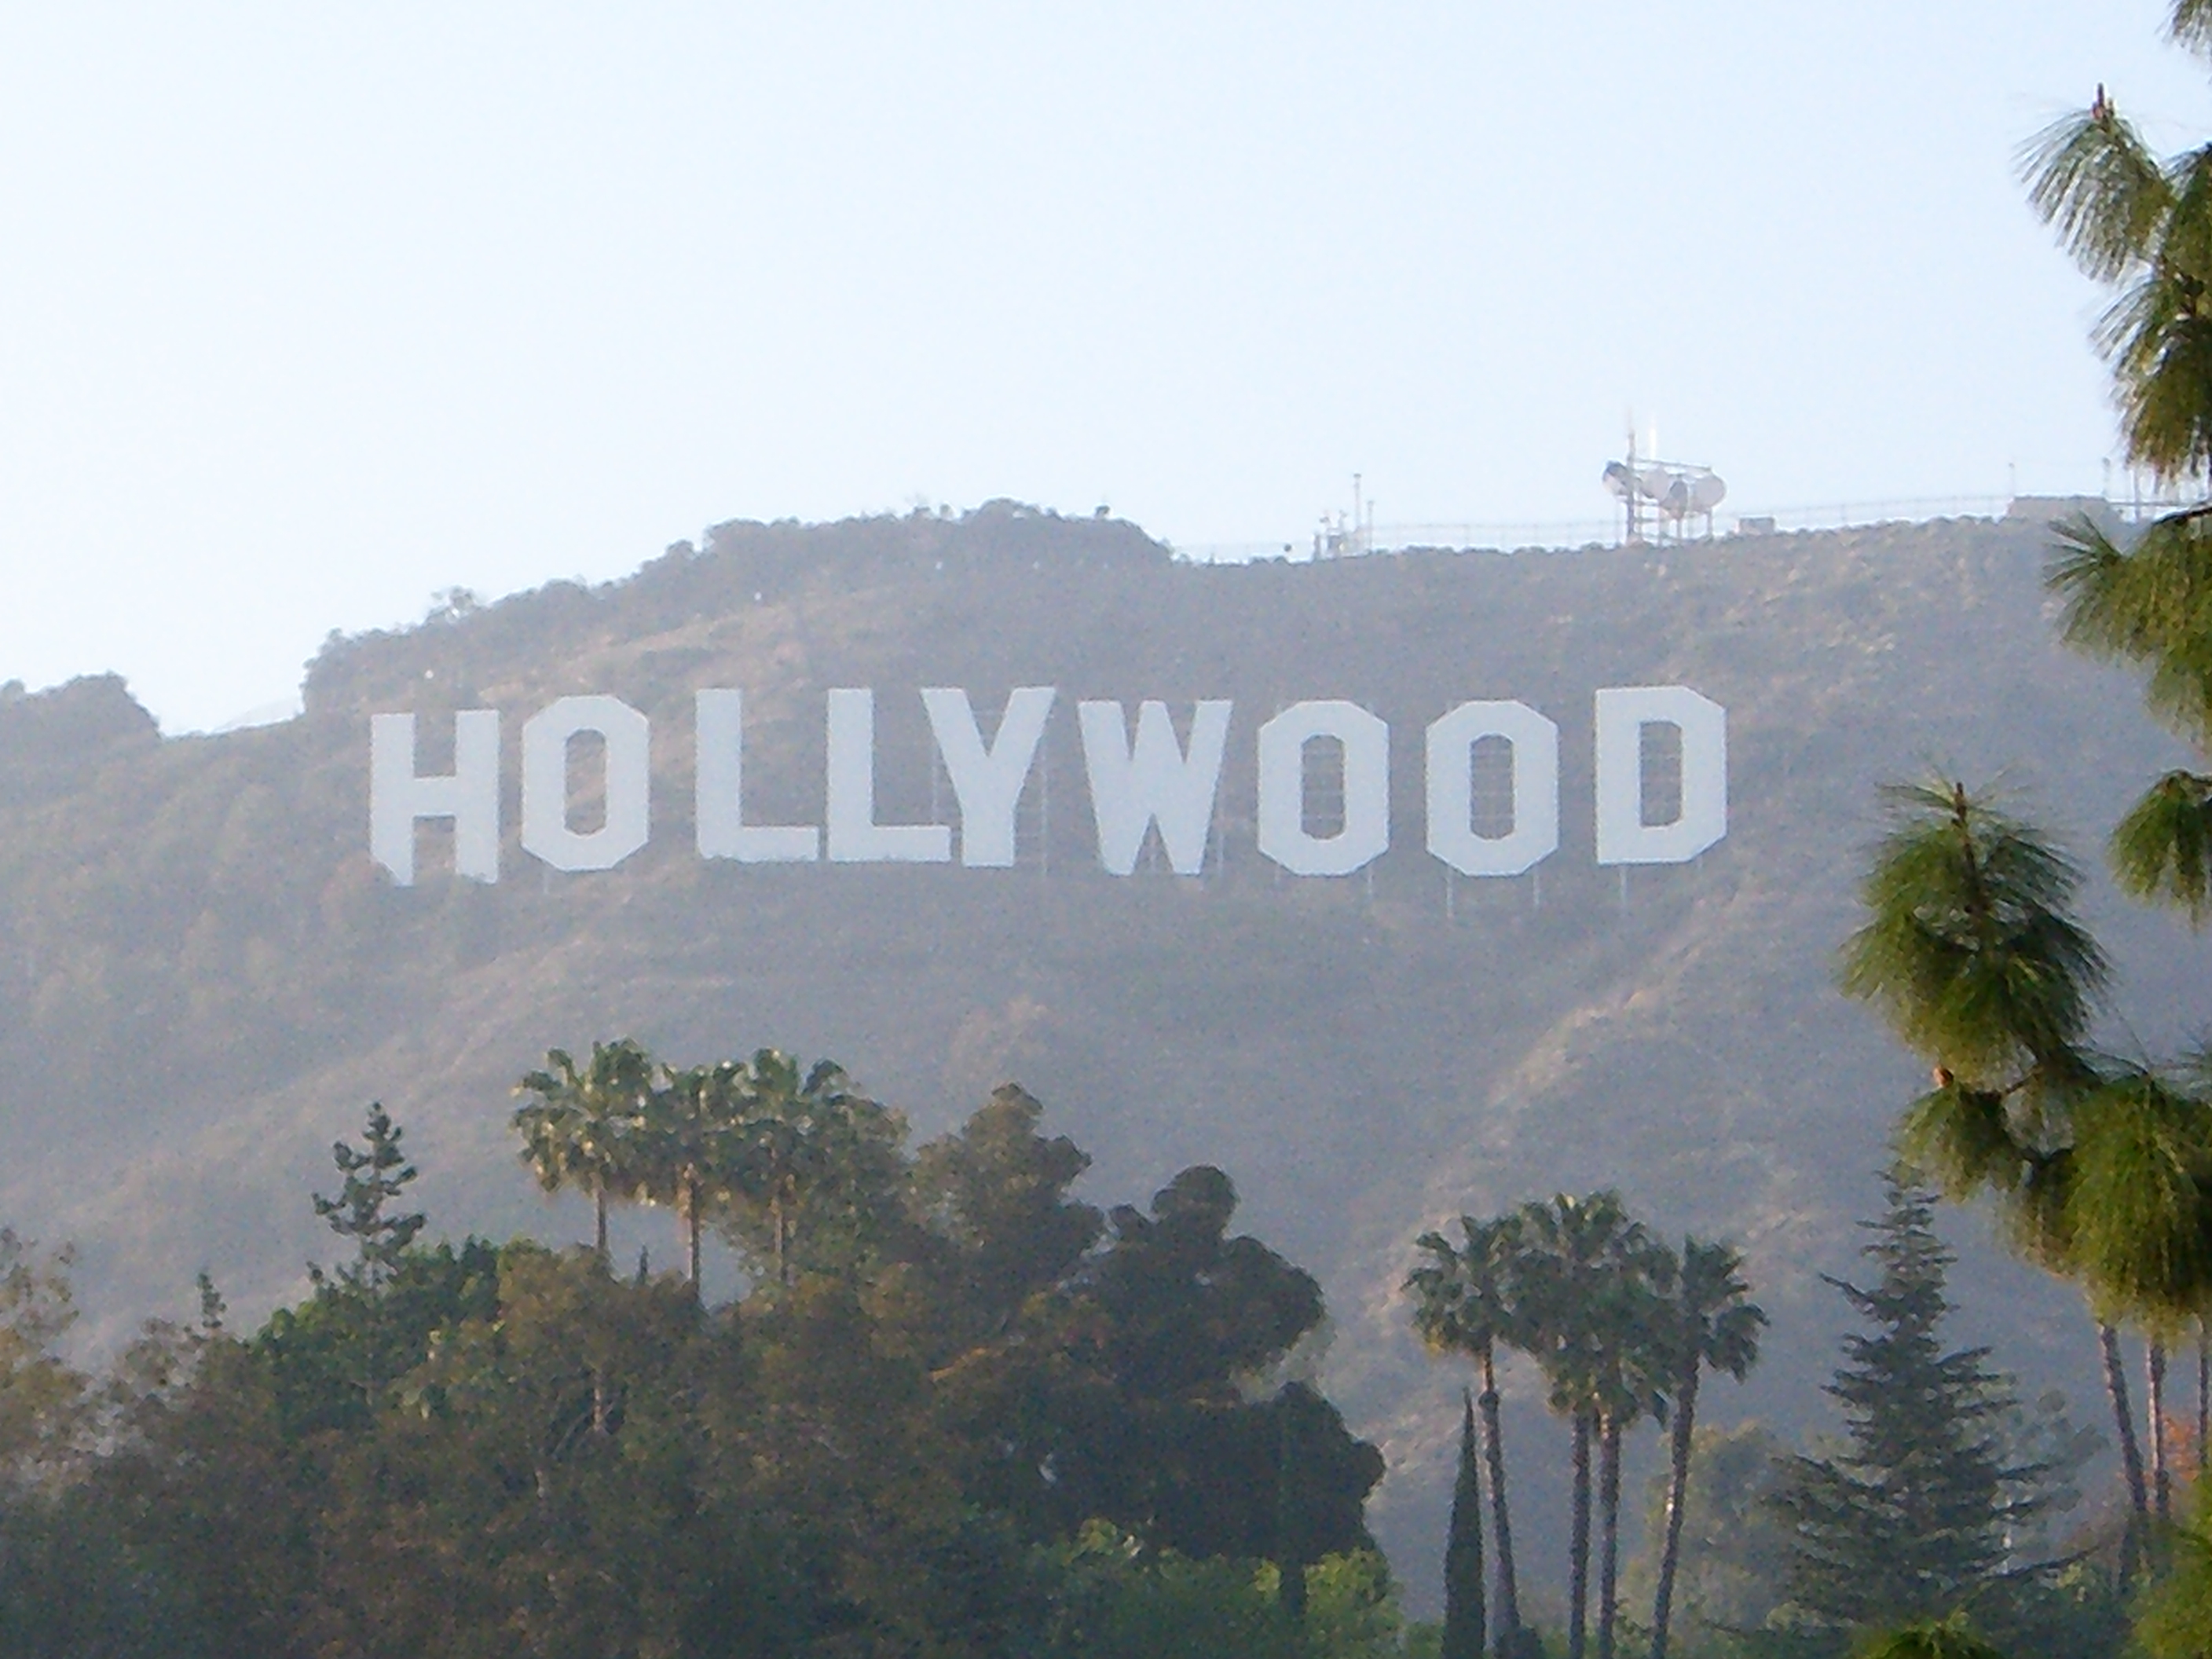 Hollywood - desktop wallpaper